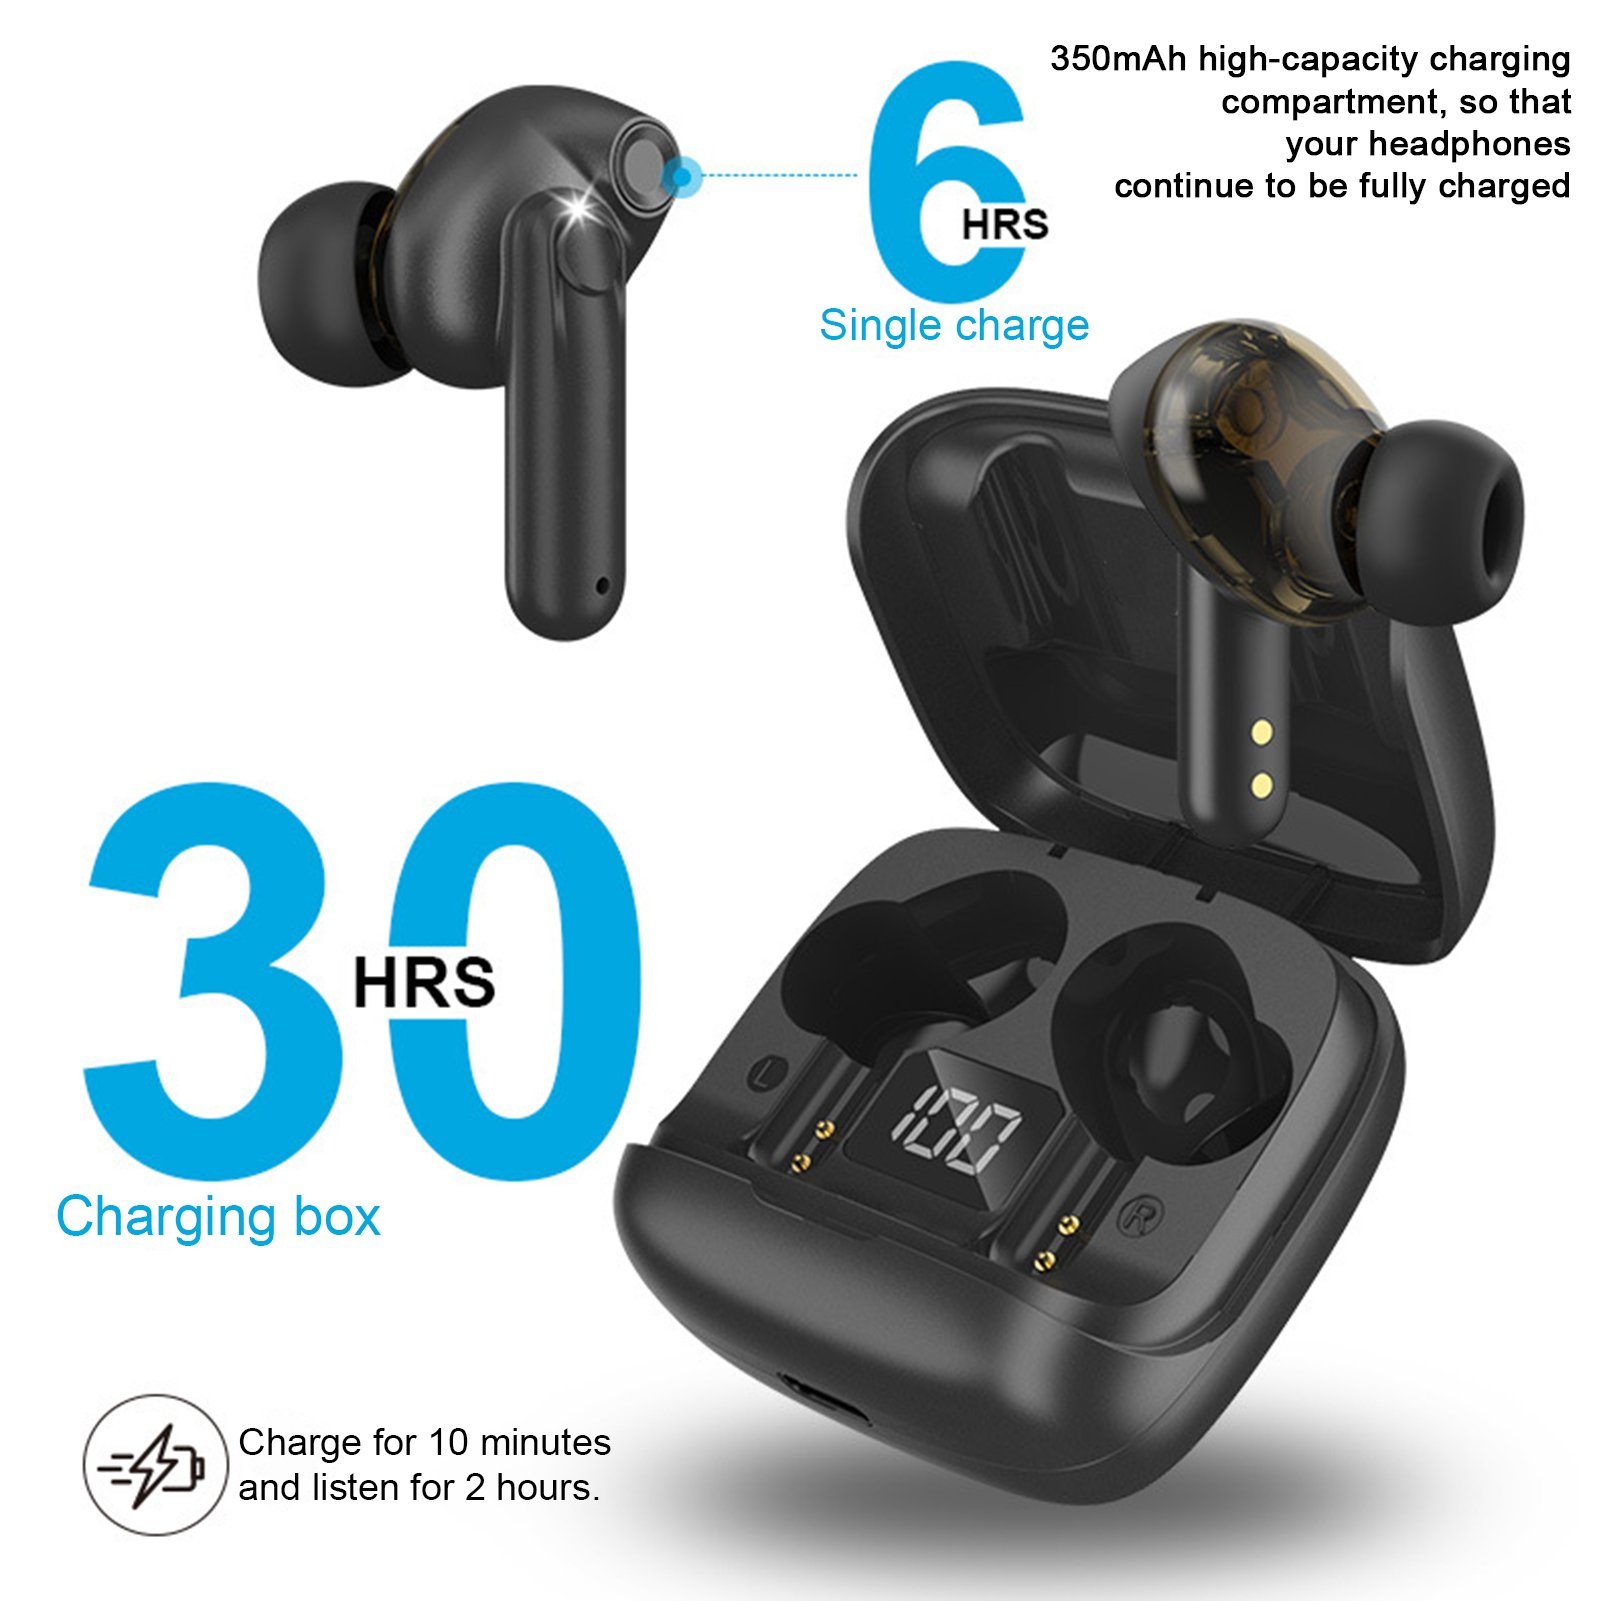 Rutaqian HiFi Bluetooth Sound Adaptive In (Bluetooth) Kopfhörer 5.2 HiFi-Kopfhörer von Schwarz Ear,